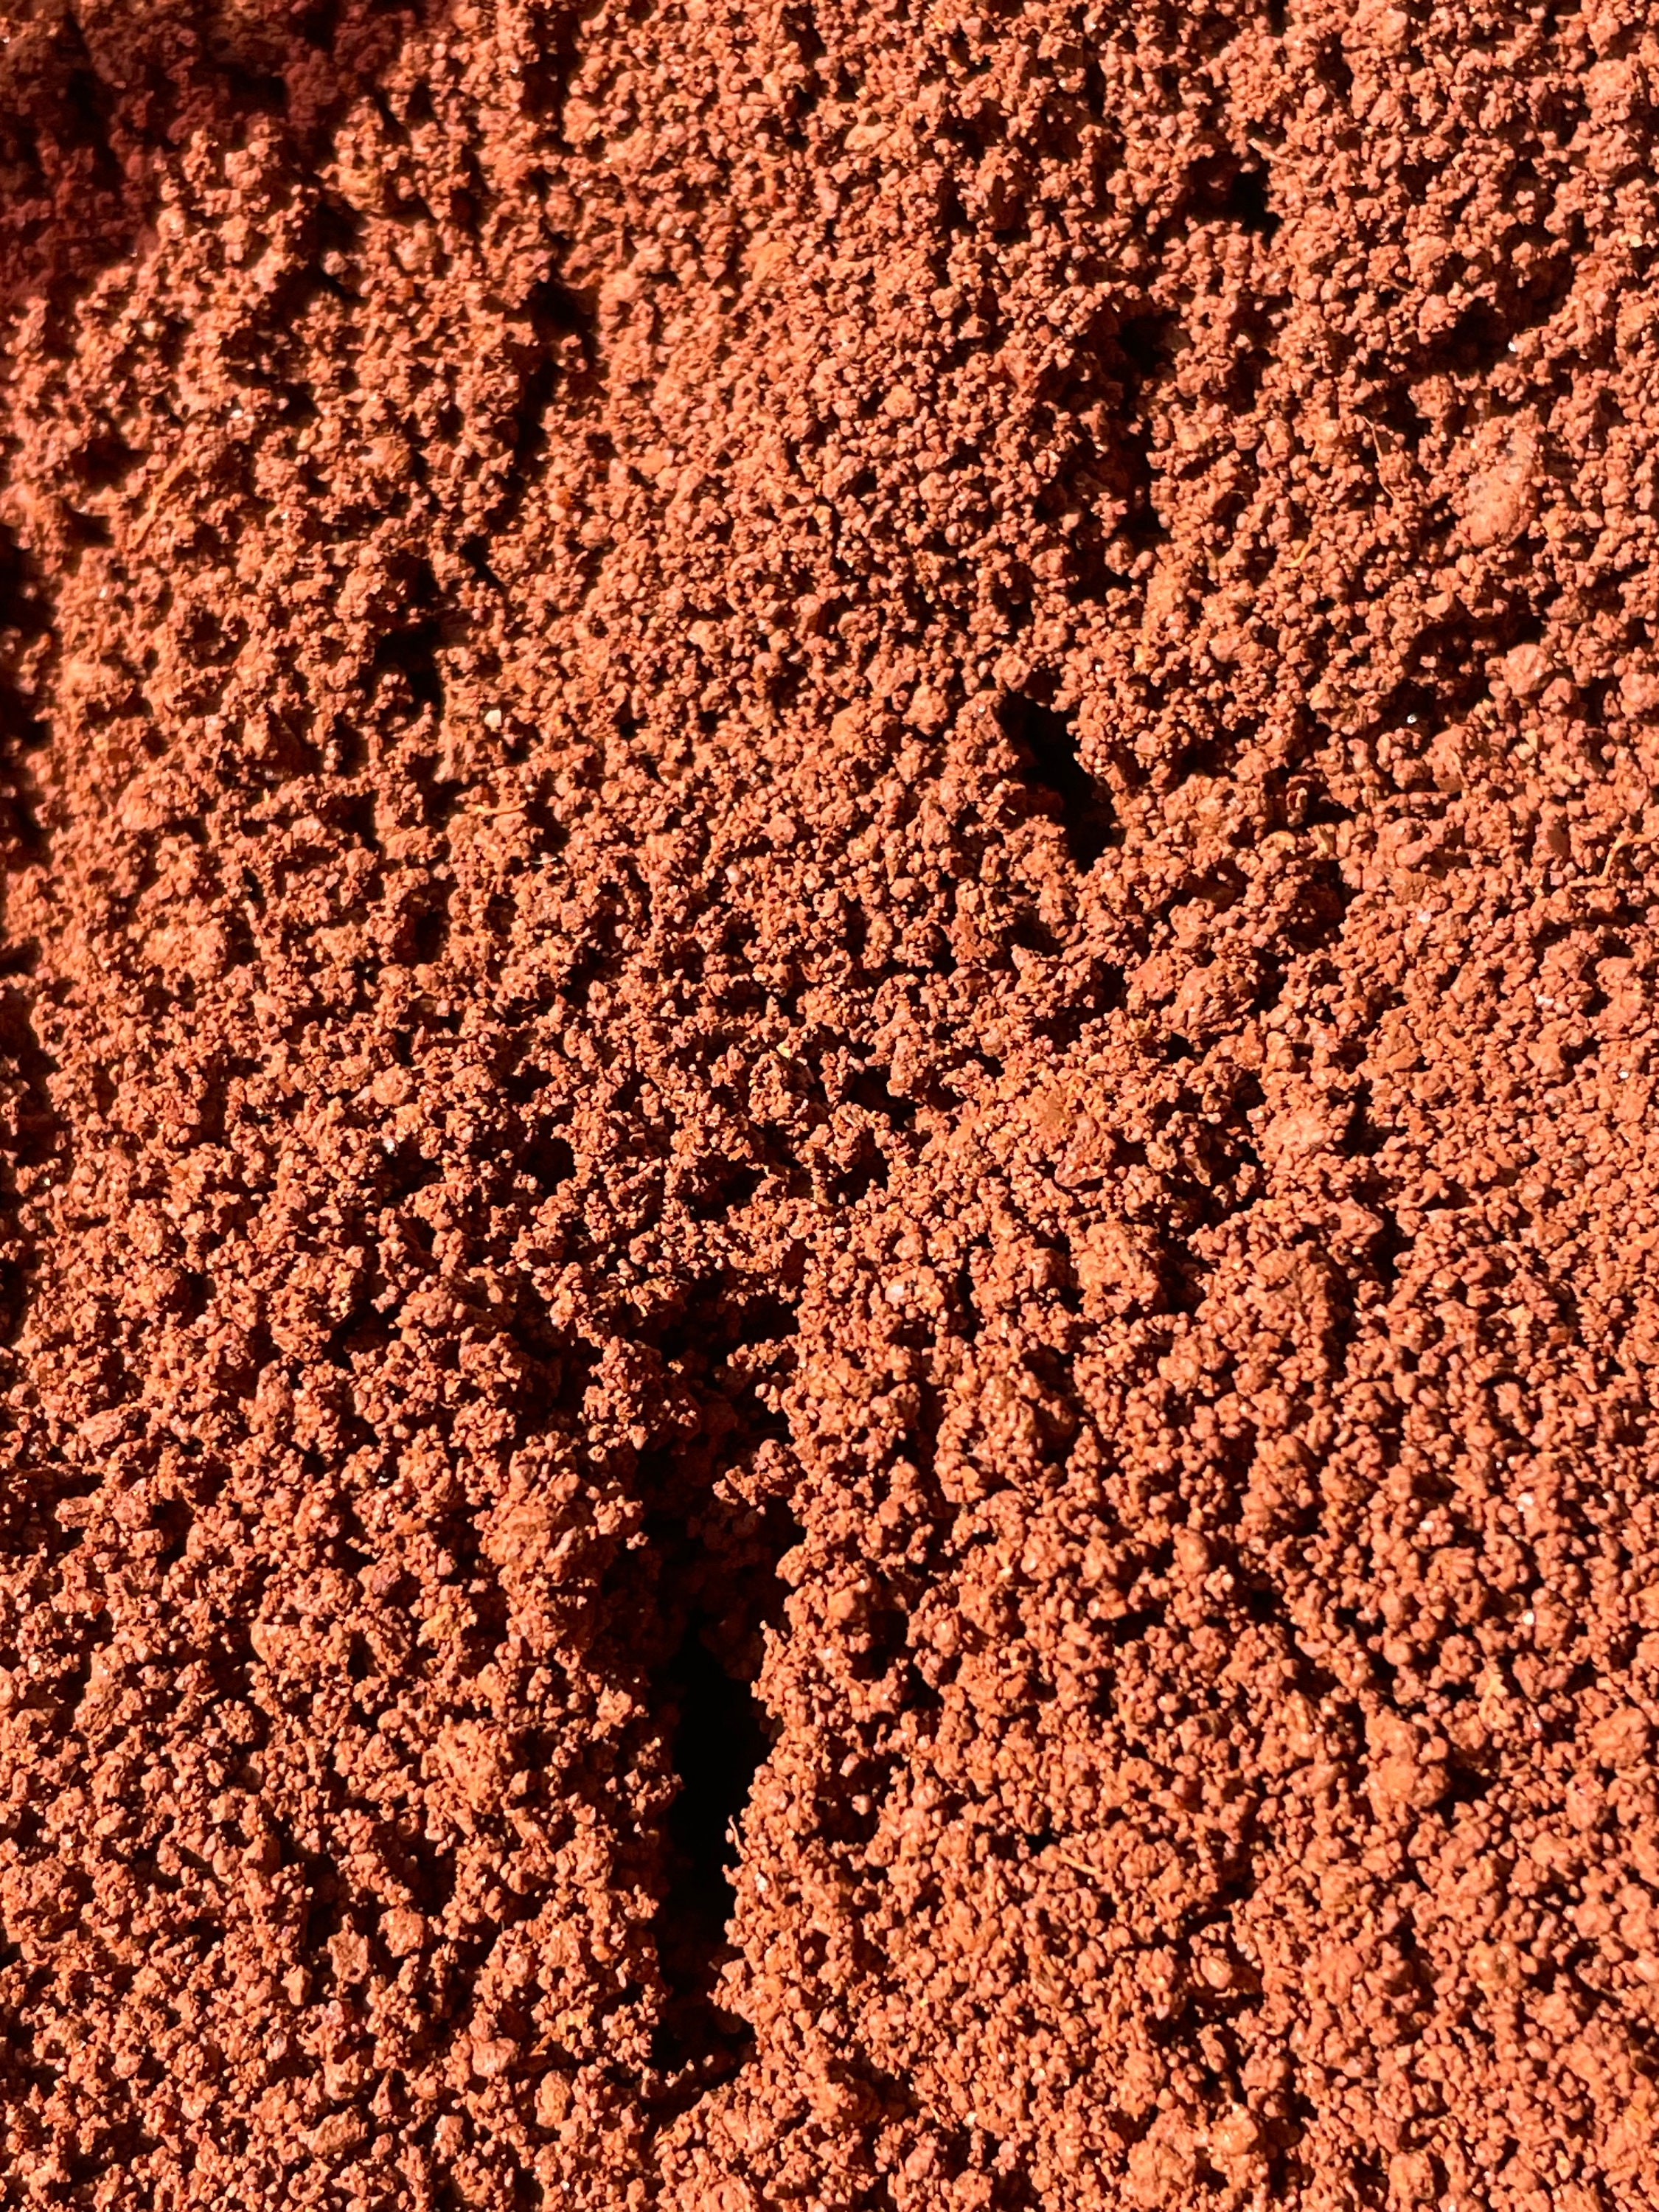 Red Dirt Edible, 1 Lbs Earthy Medium Grade, Red Clay, Dirt, Rain Dirt,  Natural Iron, Oklahoma Red Dirt, Dried Clay, Dirt, Eat Dirt, Detox 